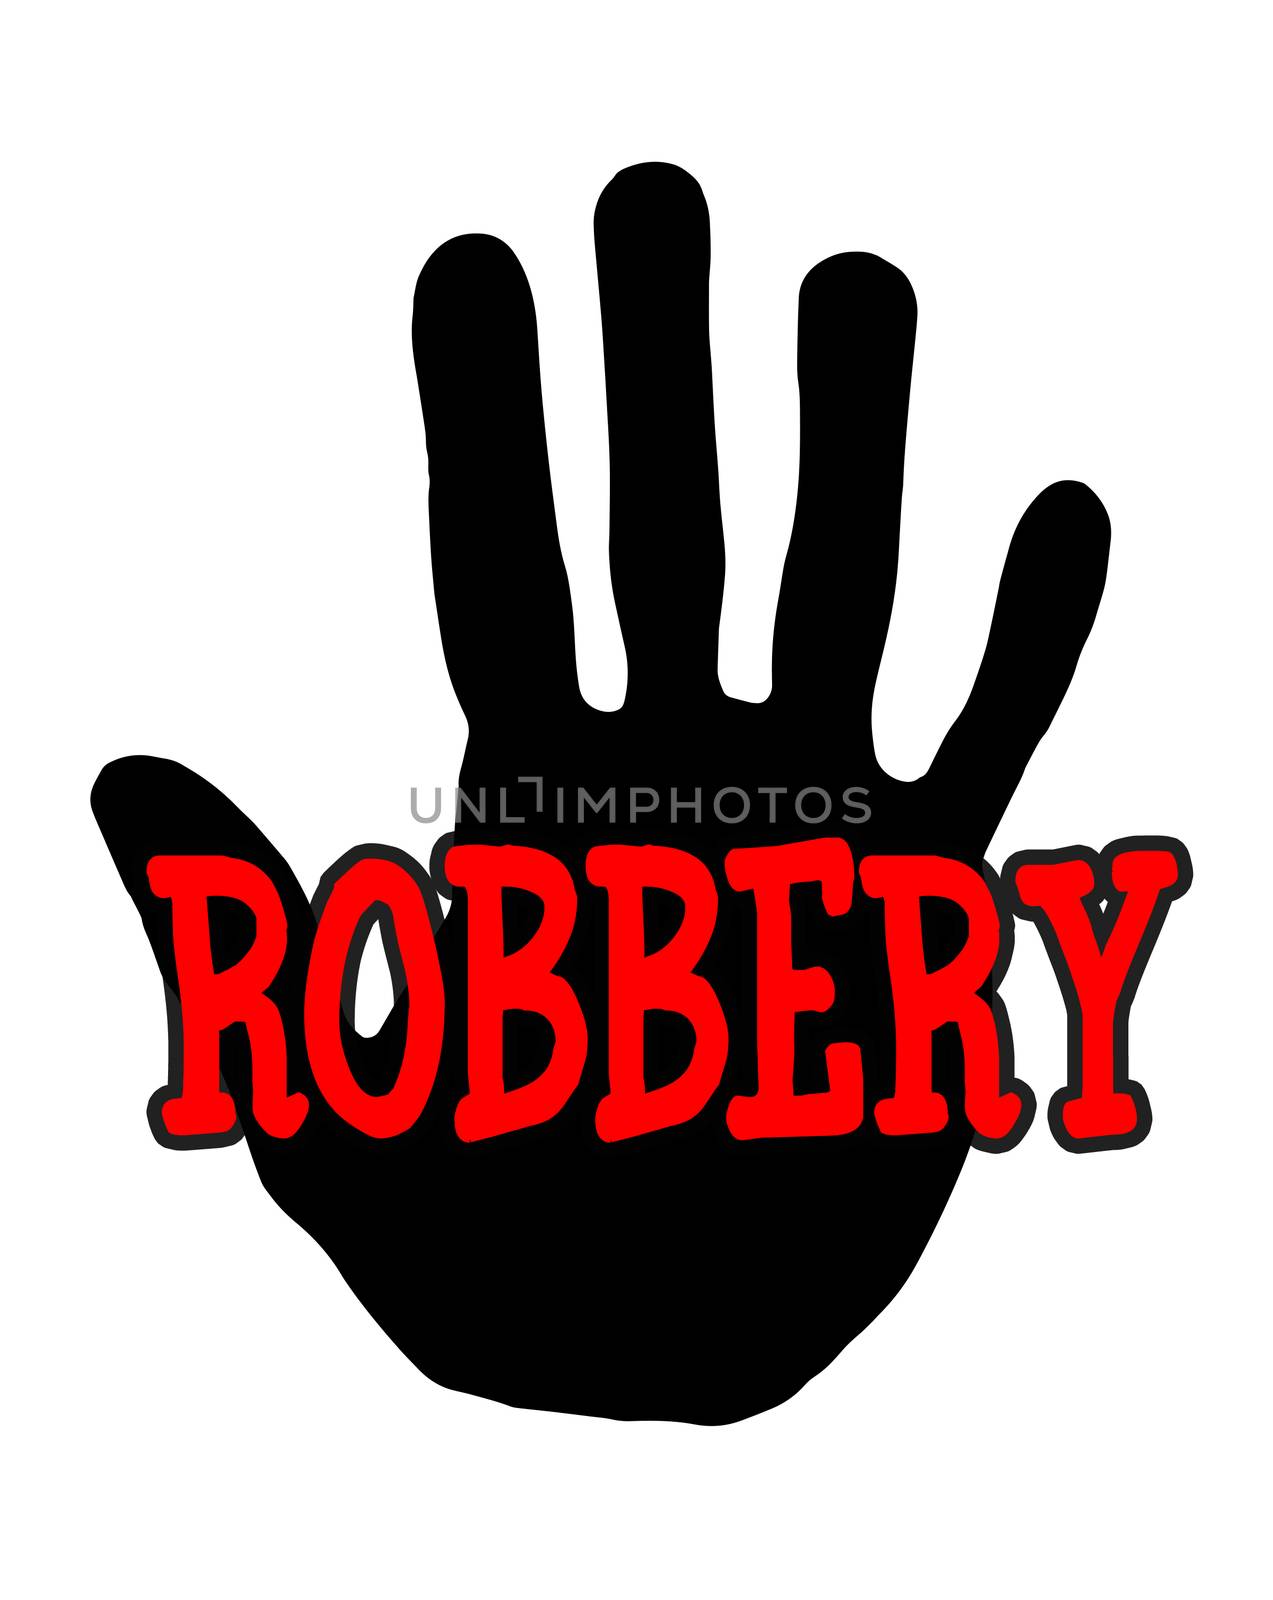 Handprint robbery by Milovan